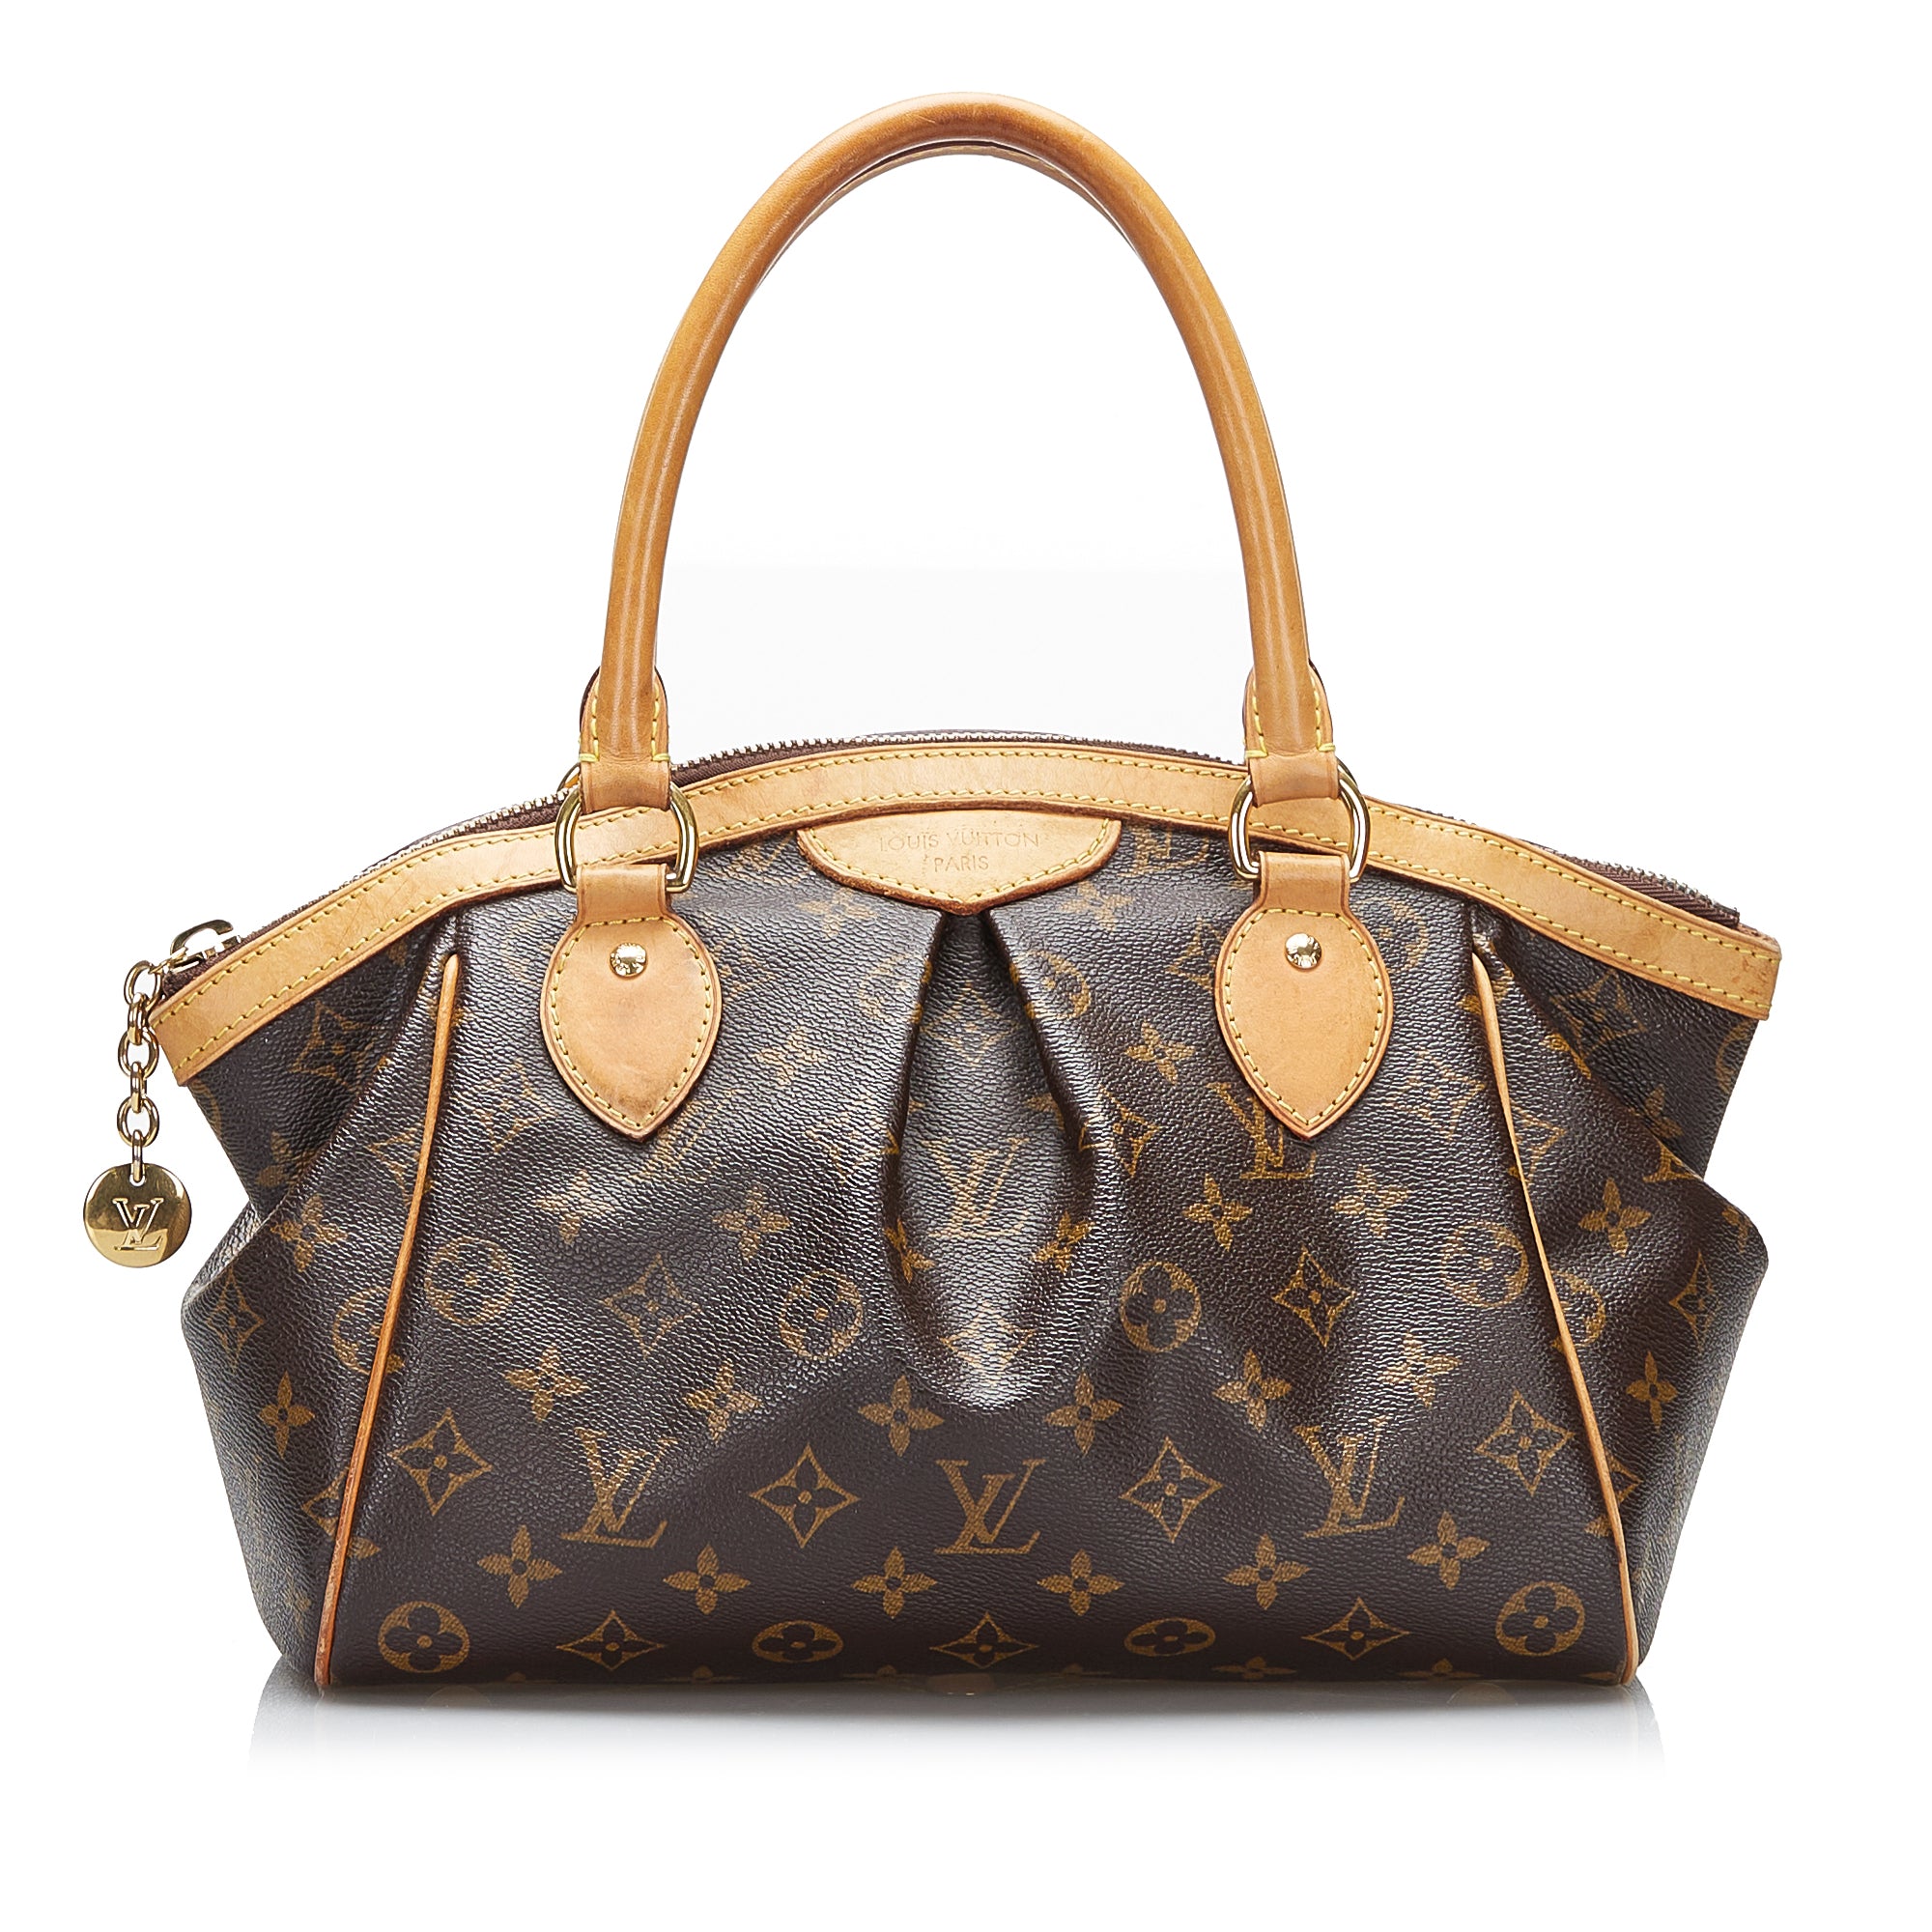 Brown Louis Vuitton Monogram Tivoli PM Handbag, SarahbeebeShops Revival